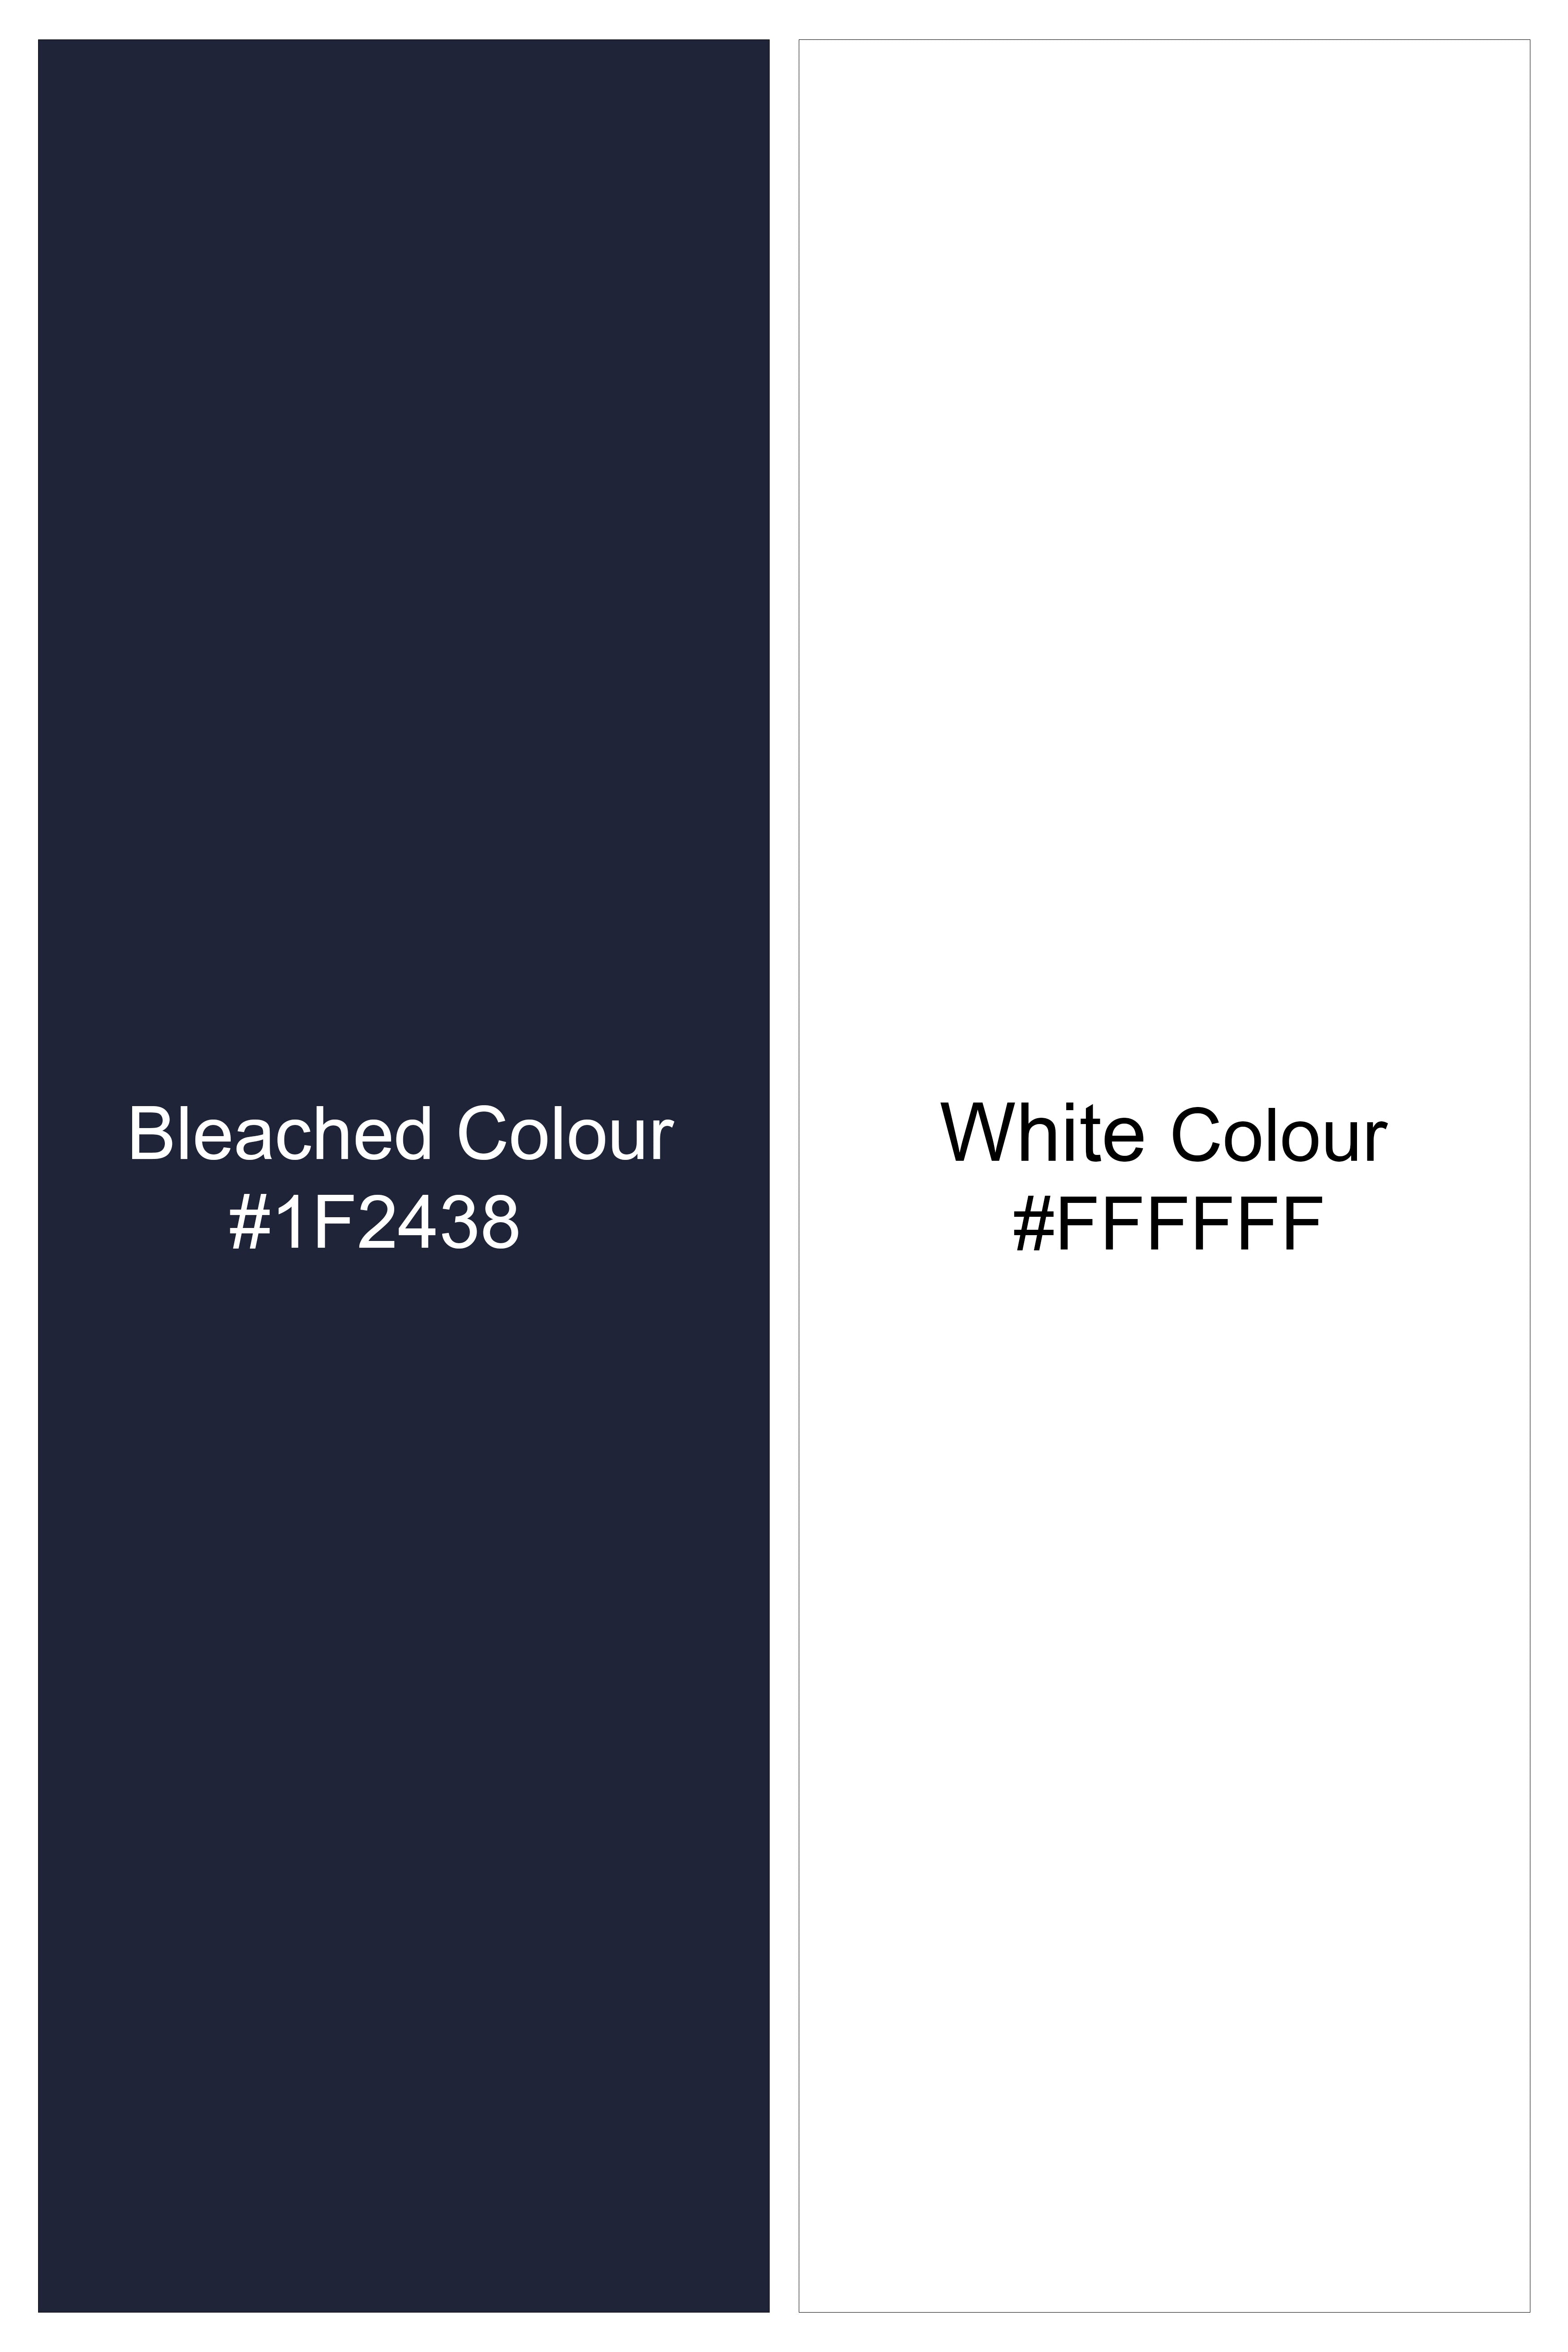 Bleached Blue with White Hand Painted Super Soft Premium Cotton Designer Shirt 8873-BLE-ART01-38, 8873-BLE-ART01-H-38, 8873-BLE-ART01-39, 8873-BLE-ART01-H-39, 8873-BLE-ART01-40, 8873-BLE-ART01-H-40, 8873-BLE-ART01-42, 8873-BLE-ART01-H-42, 8873-BLE-ART01-44, 8873-BLE-ART01-H-44, 8873-BLE-ART01-46, 8873-BLE-ART01-H-46, 8873-BLE-ART01-48, 8873-BLE-ART01-H-48, 8873-BLE-ART01-50, 8873-BLE-ART01-H-50, 8873-BLE-ART01-52, 8873-BLE-ART01-H-52